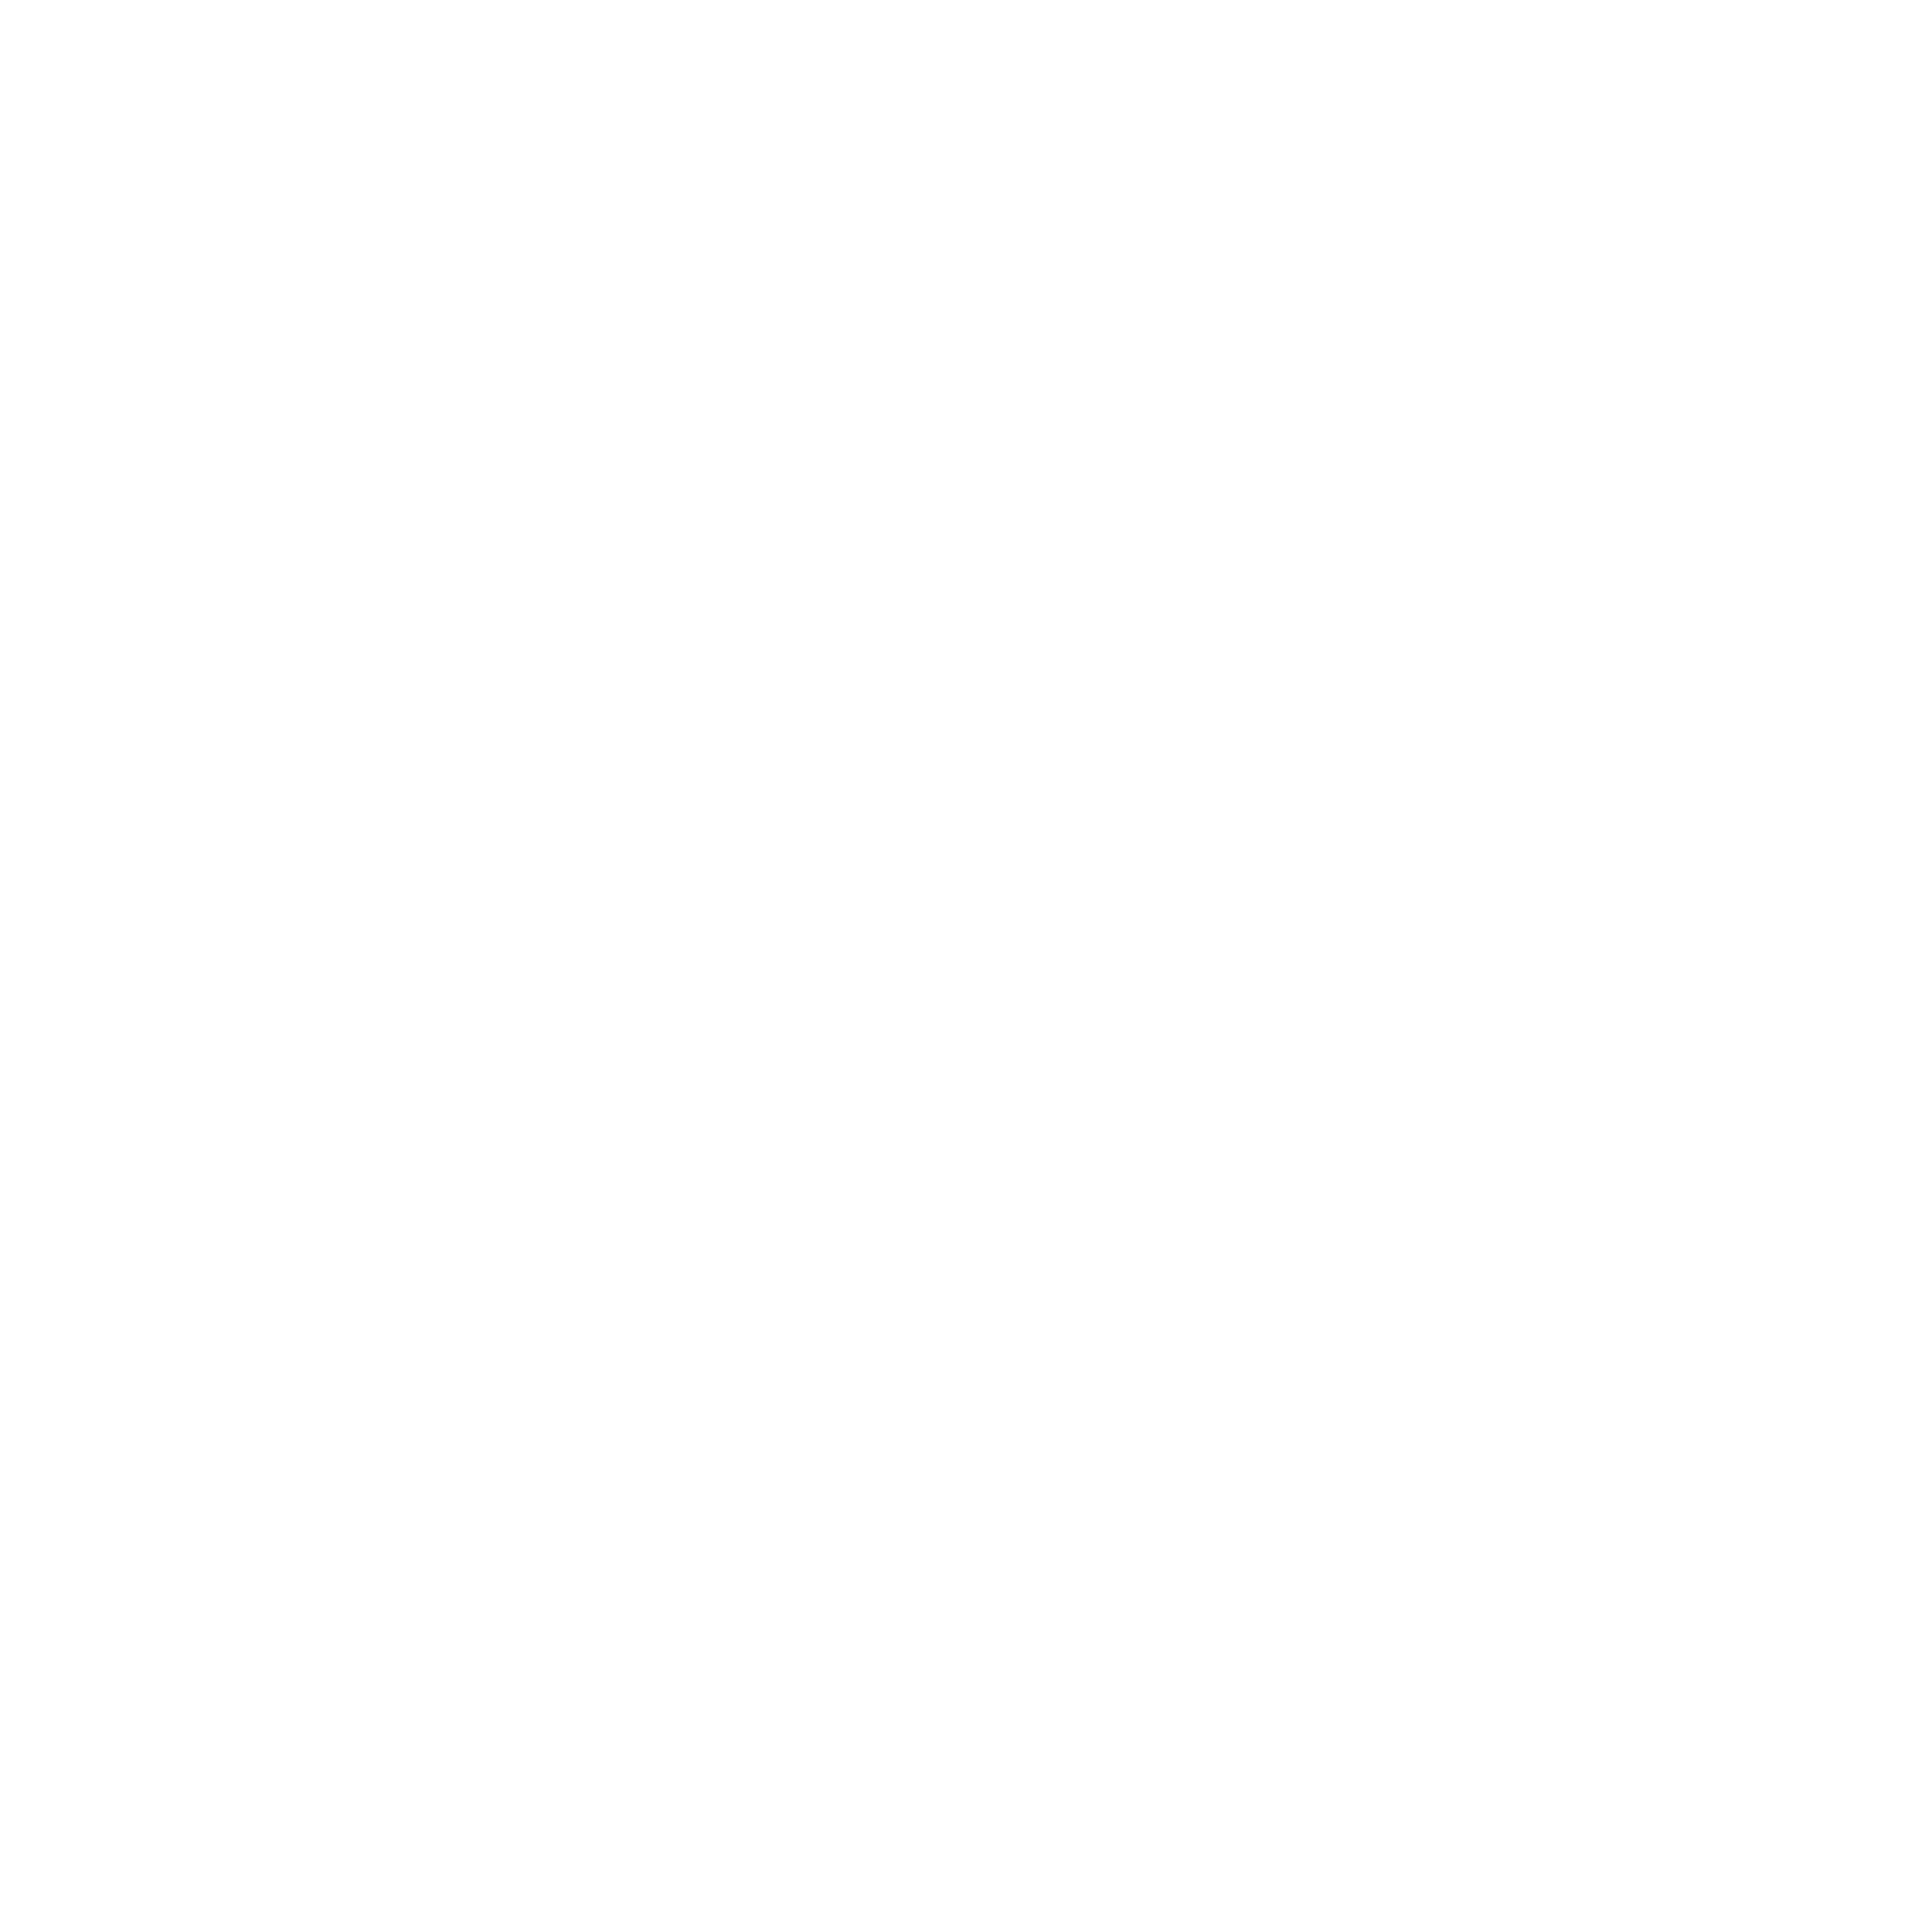 StonxFx